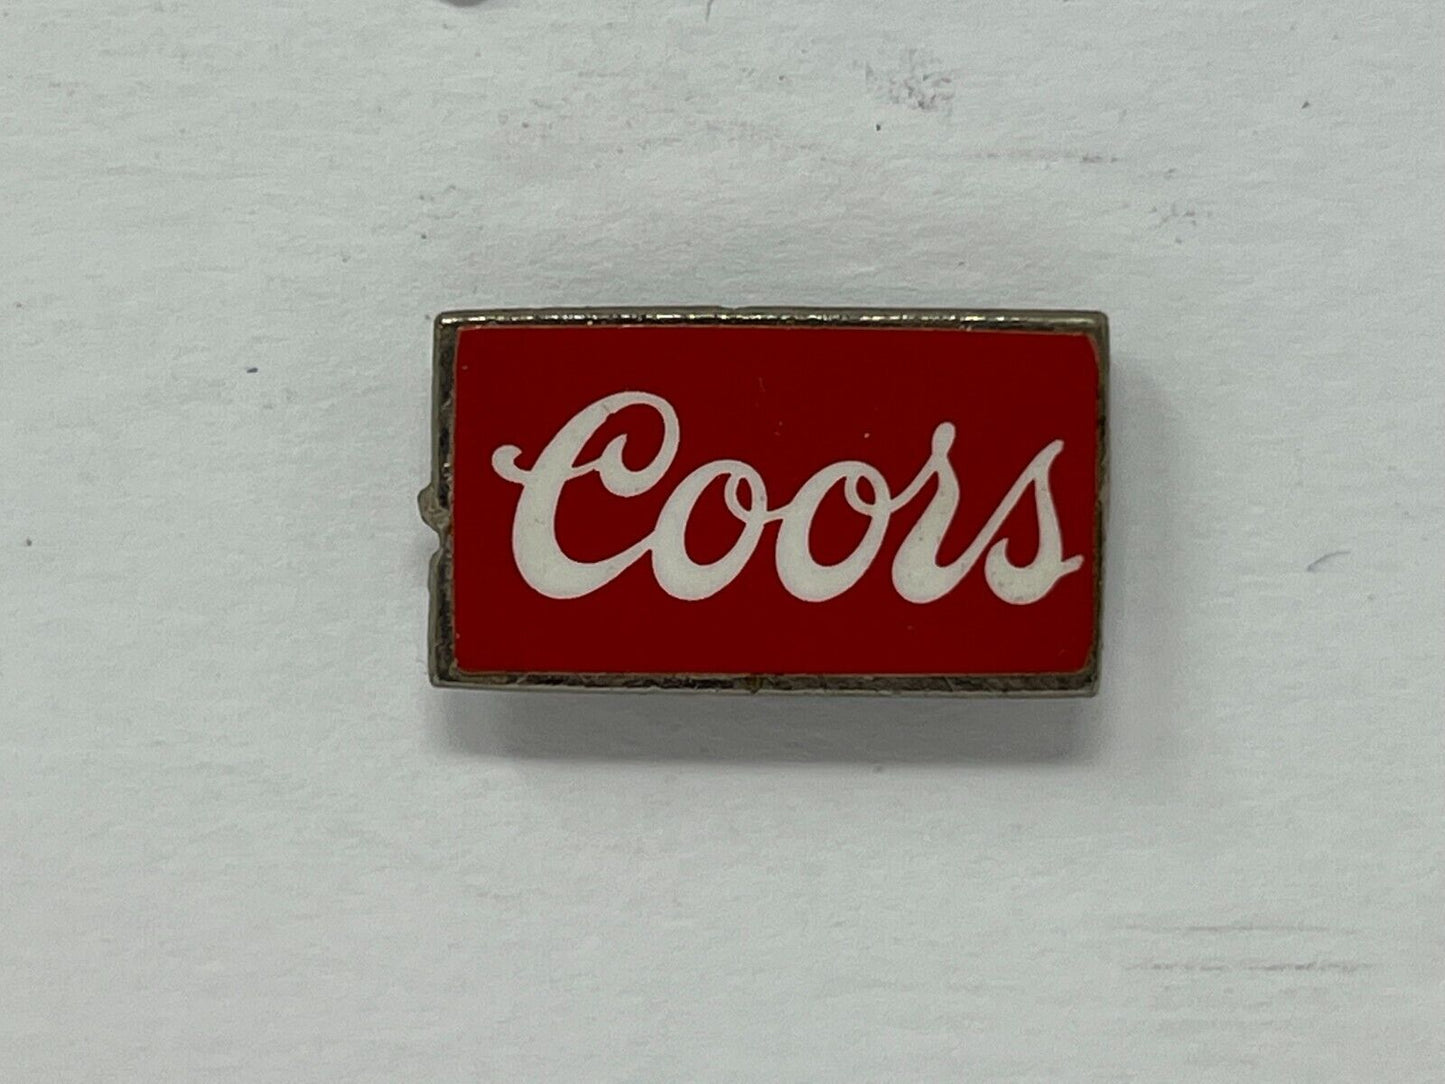 Coors Beer & Liquor Lapel Pin